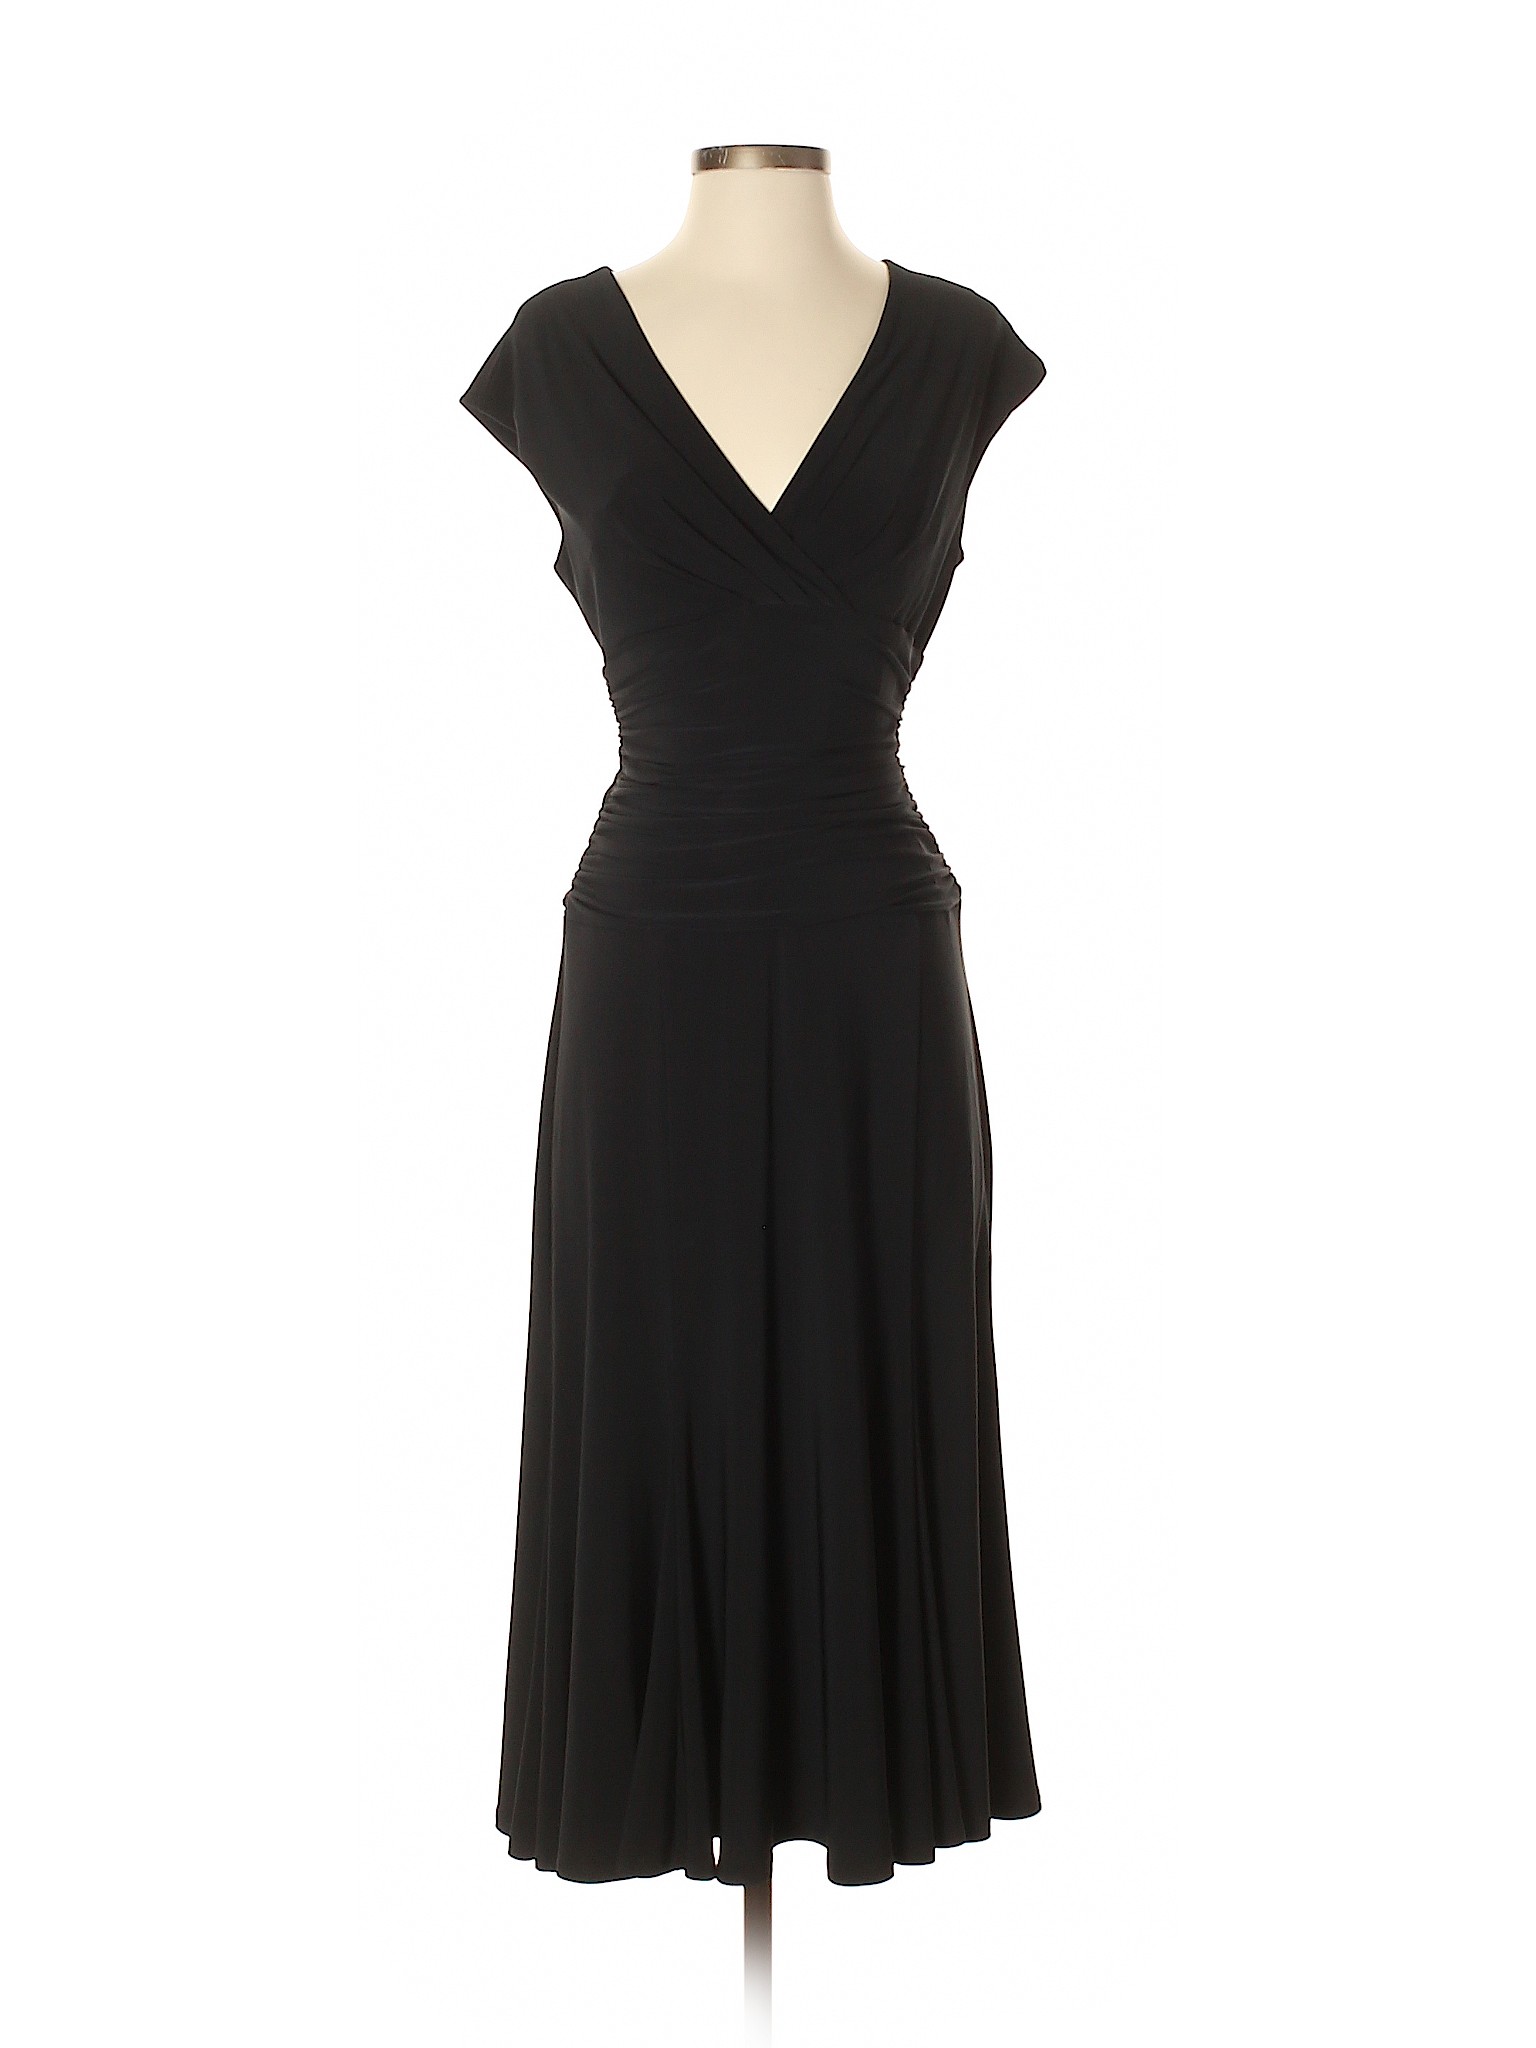 Jones New York Women Black Cocktail Dress 4 | eBay